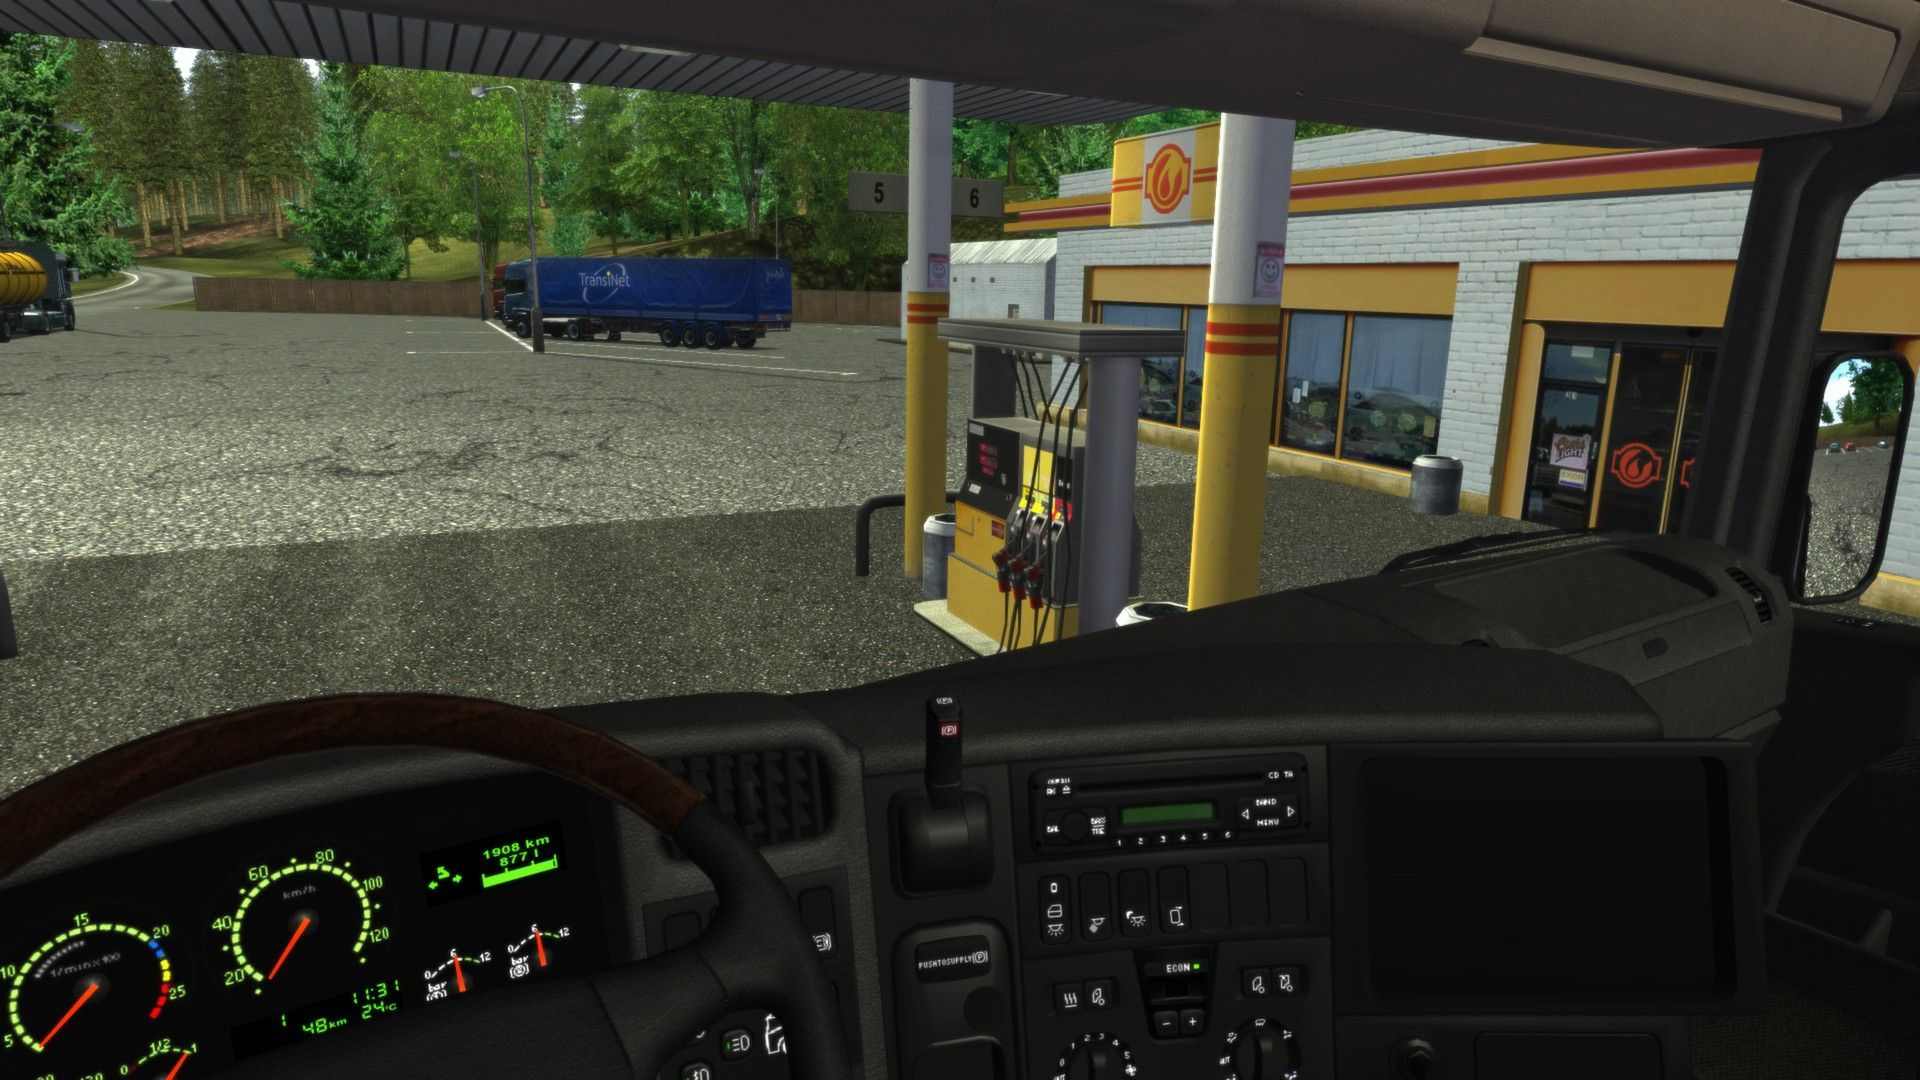 euro truck simulator 2 pc full